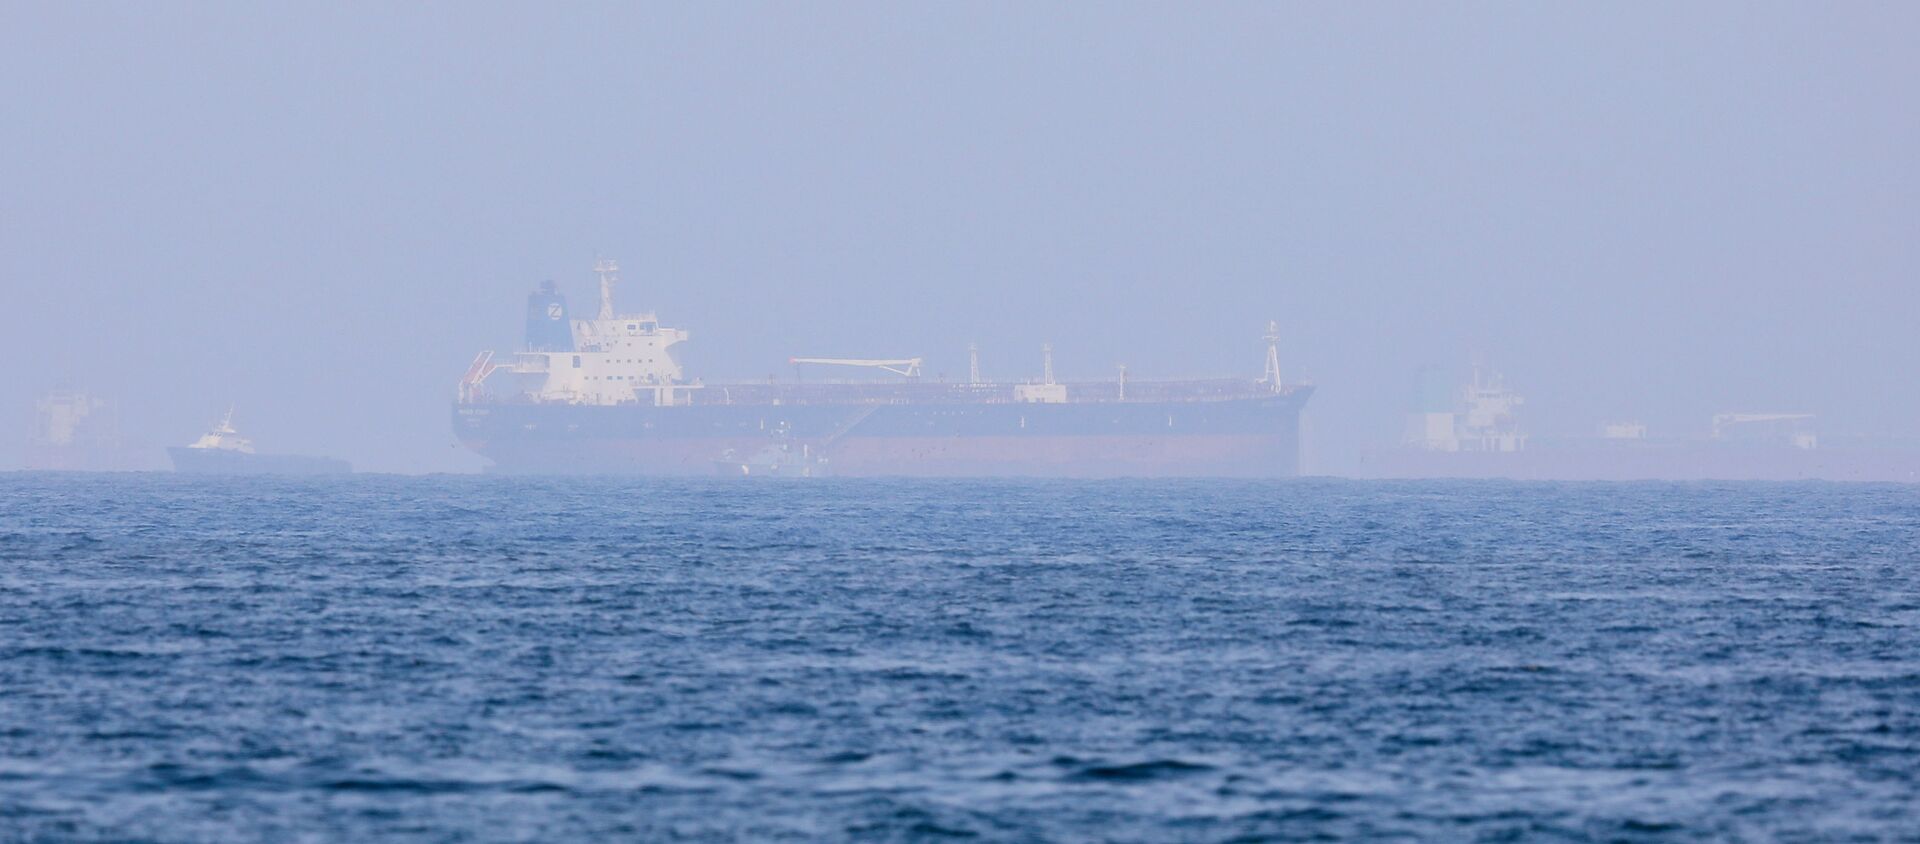 Mercer Street, an Israeli-managed oil tanker that was attacked is seen off Fujairah Port in United Arab Emirates, August 3, 2021. REUTERS/Rula Rouhana - Sputnik International, 1920, 03.08.2021